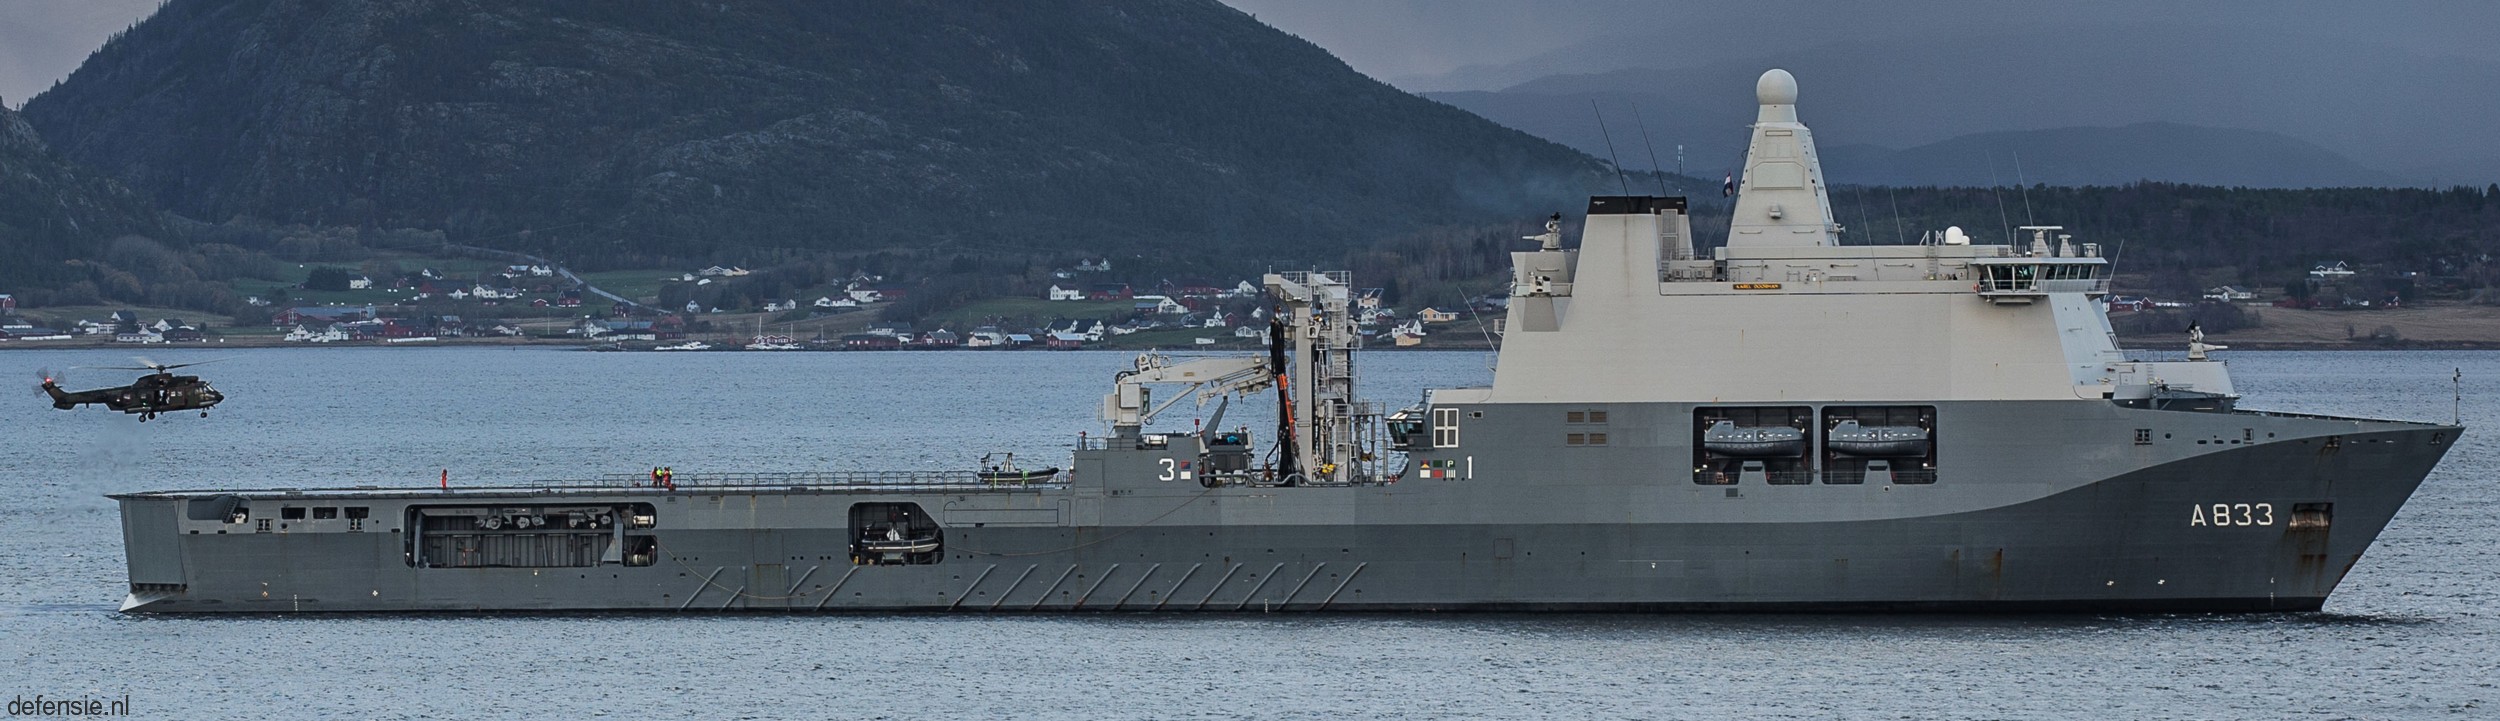 a-833 hnlms karel doorman joint support ship royal netherlands navy koninklijke marine 37